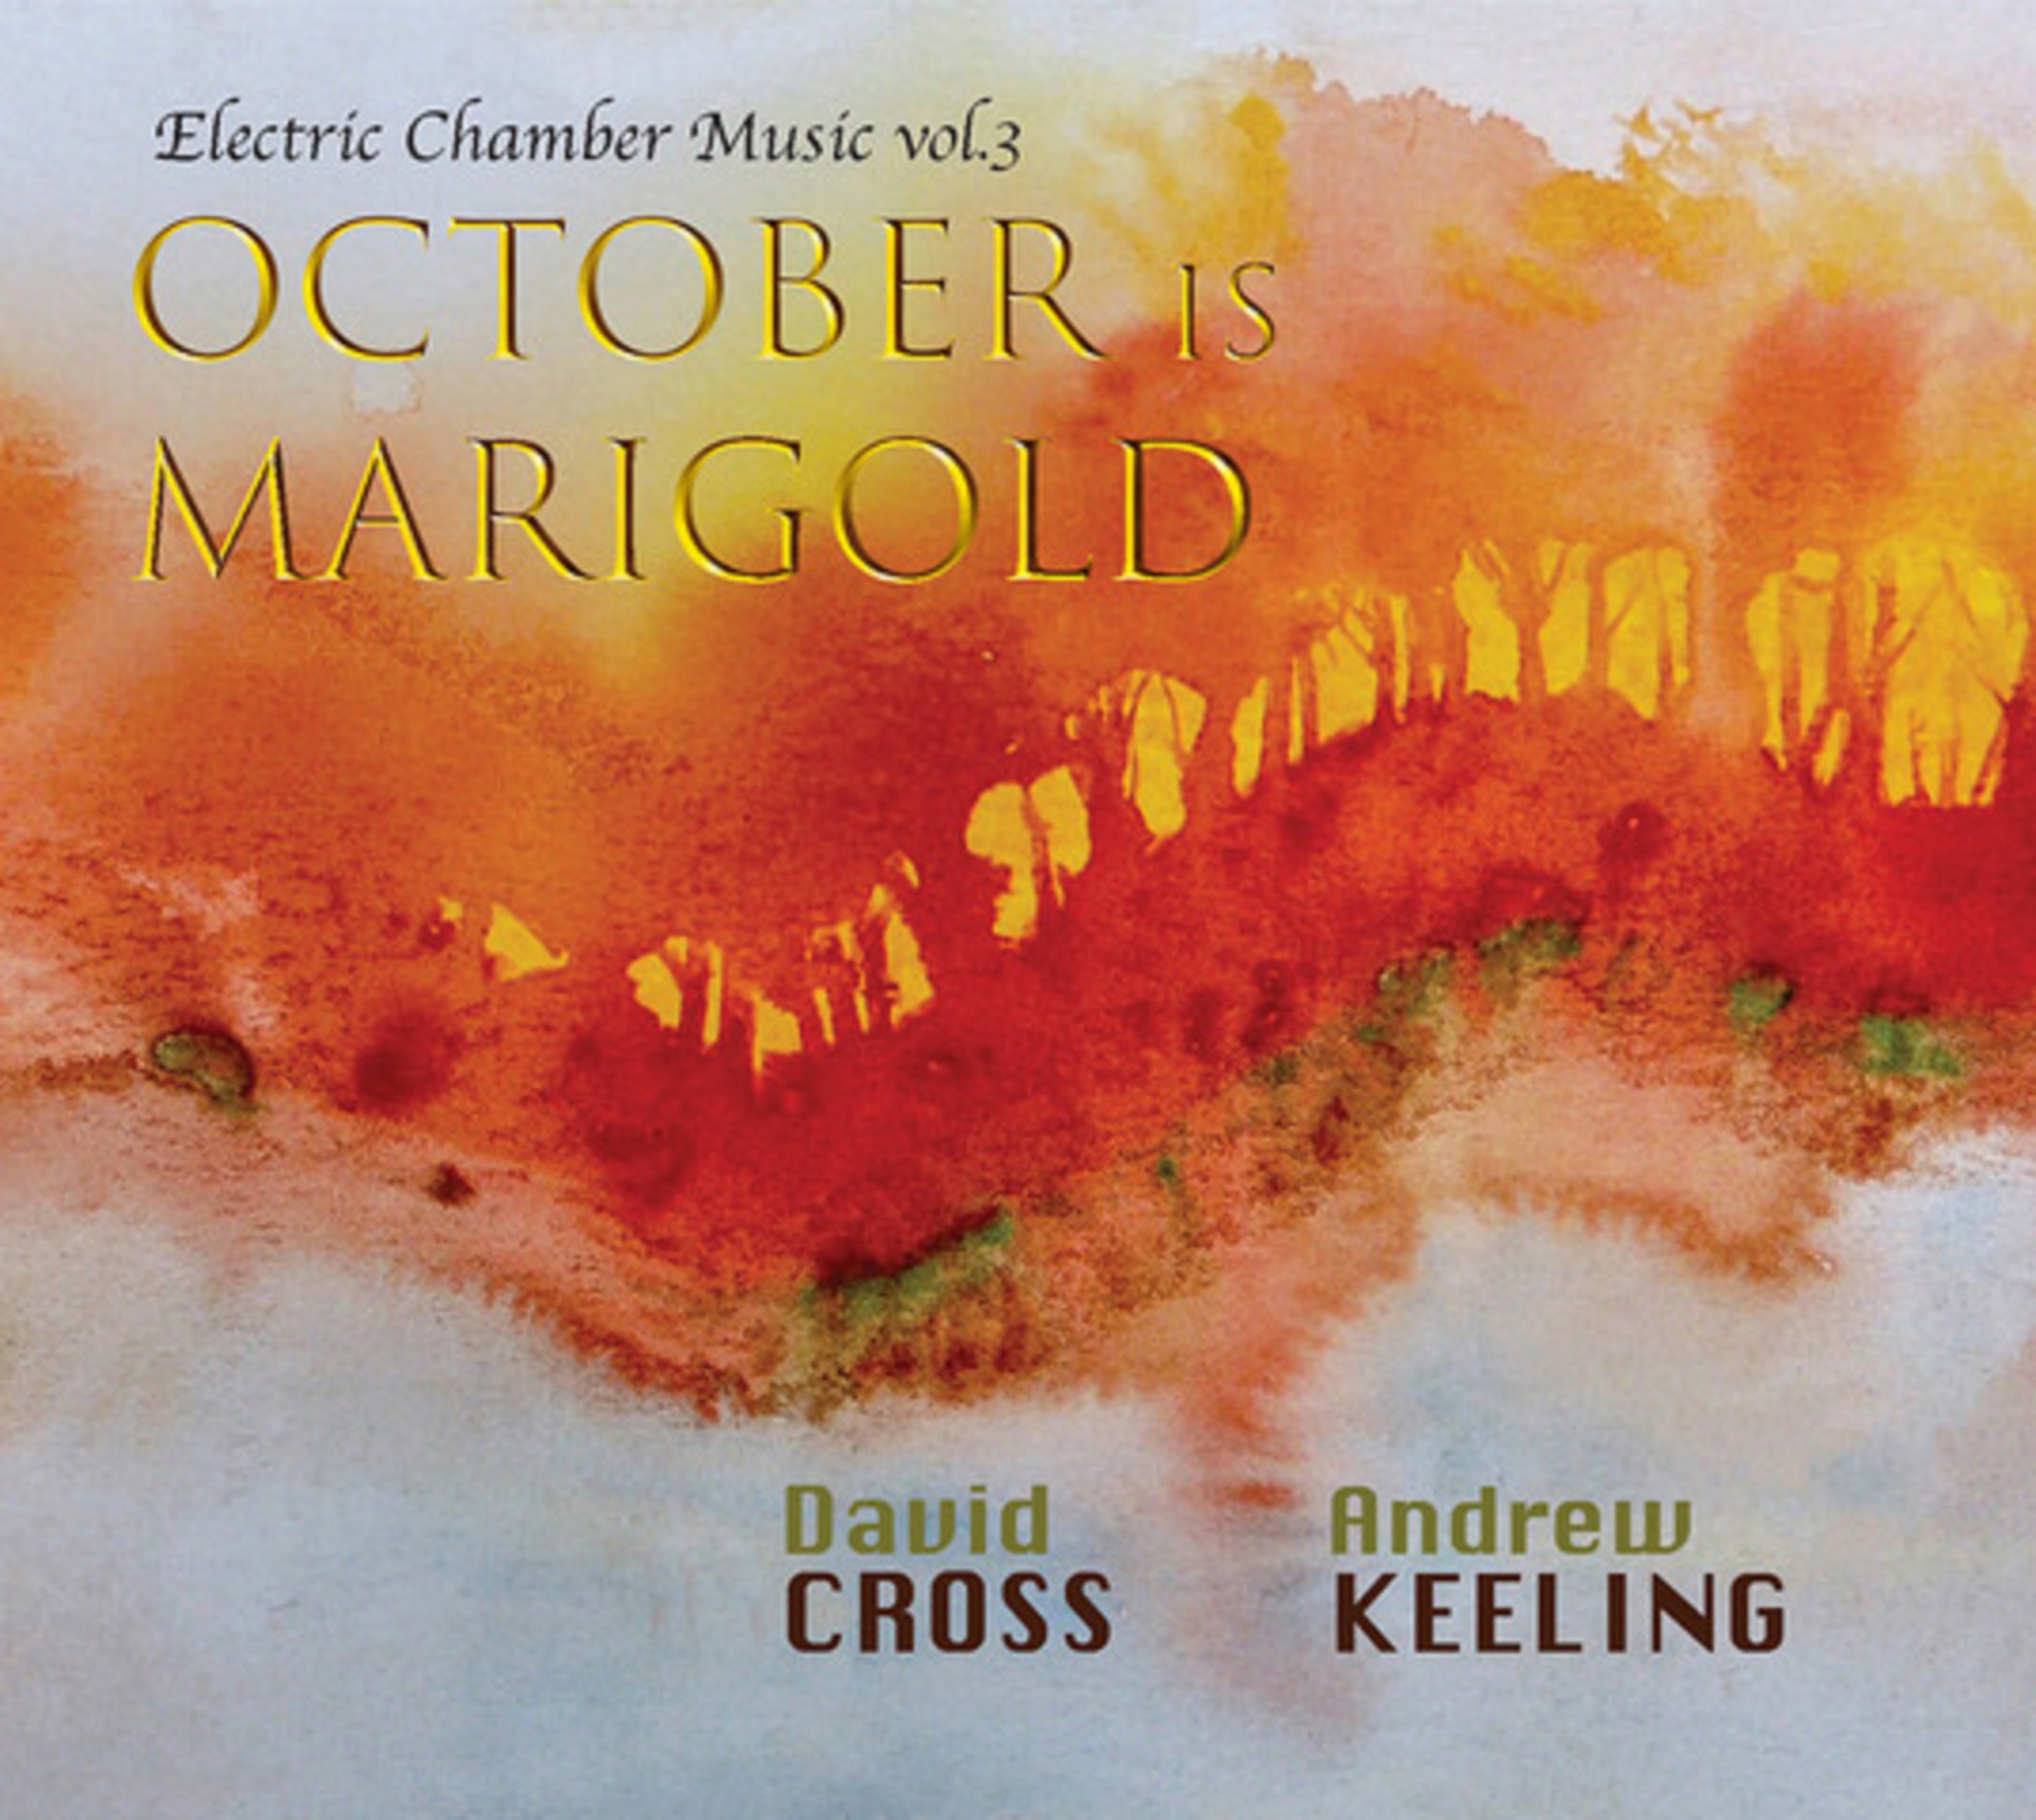 King Crimson Legend David Cross and Composer Andrew Keeling To Release Second Album “October is Marigold”